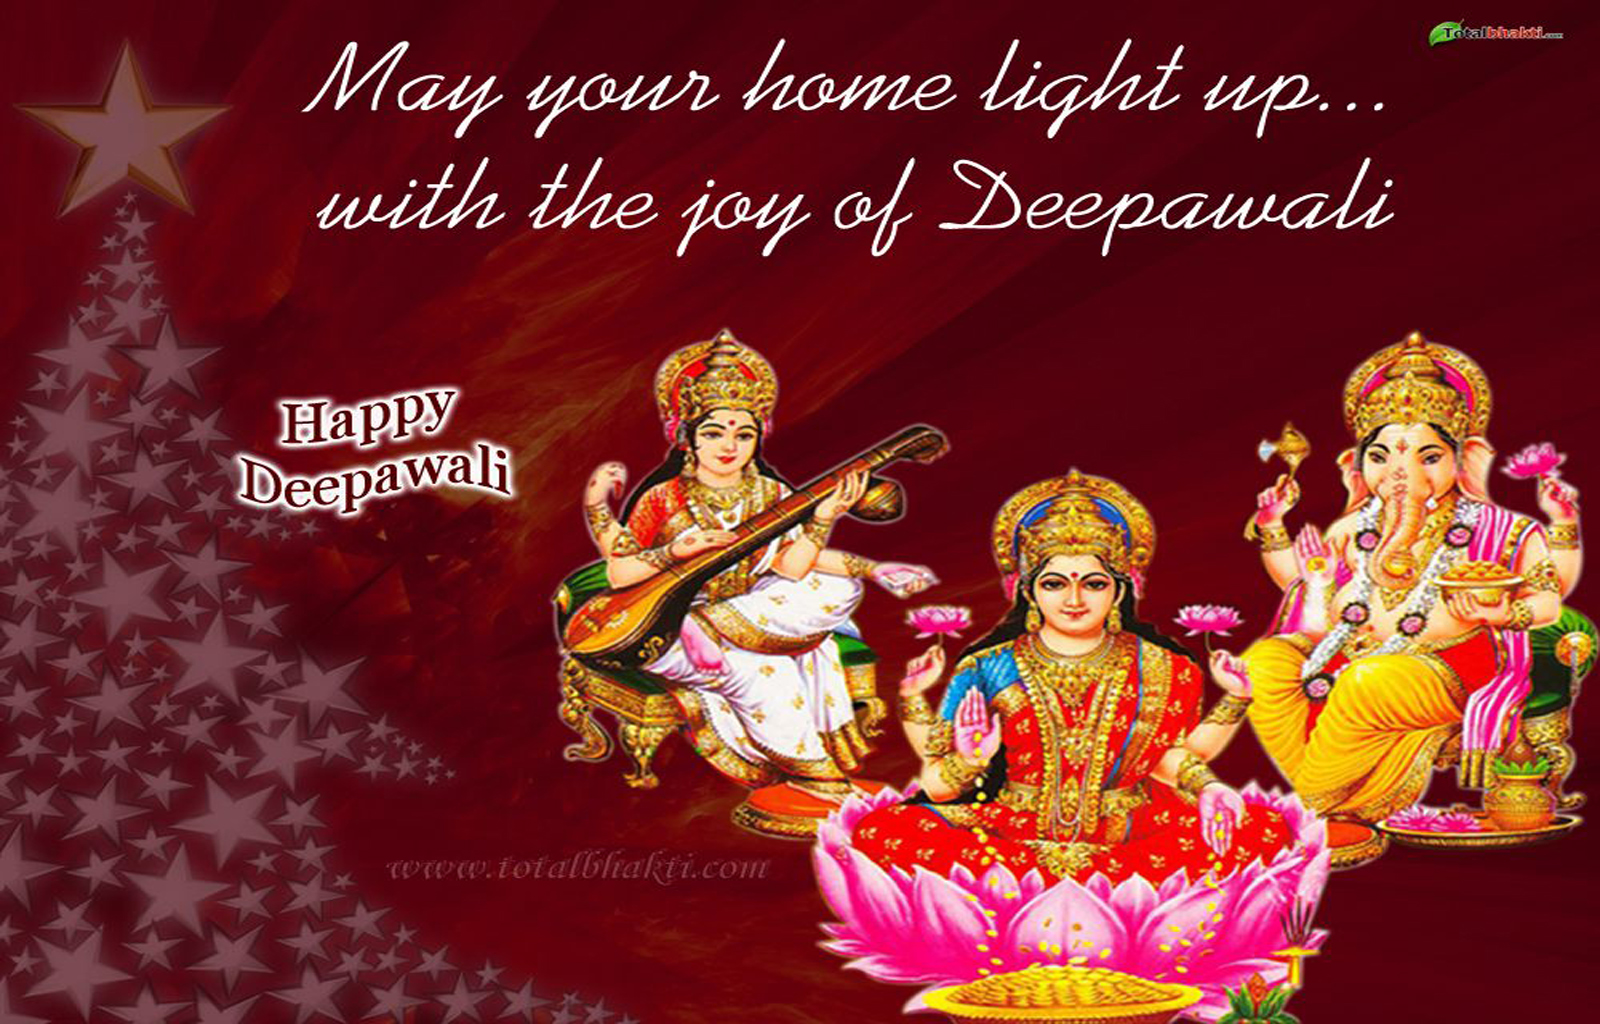 Deepawali-Goddess-Lakshmi-Saraswati-Lord-Ganesha-Pictures